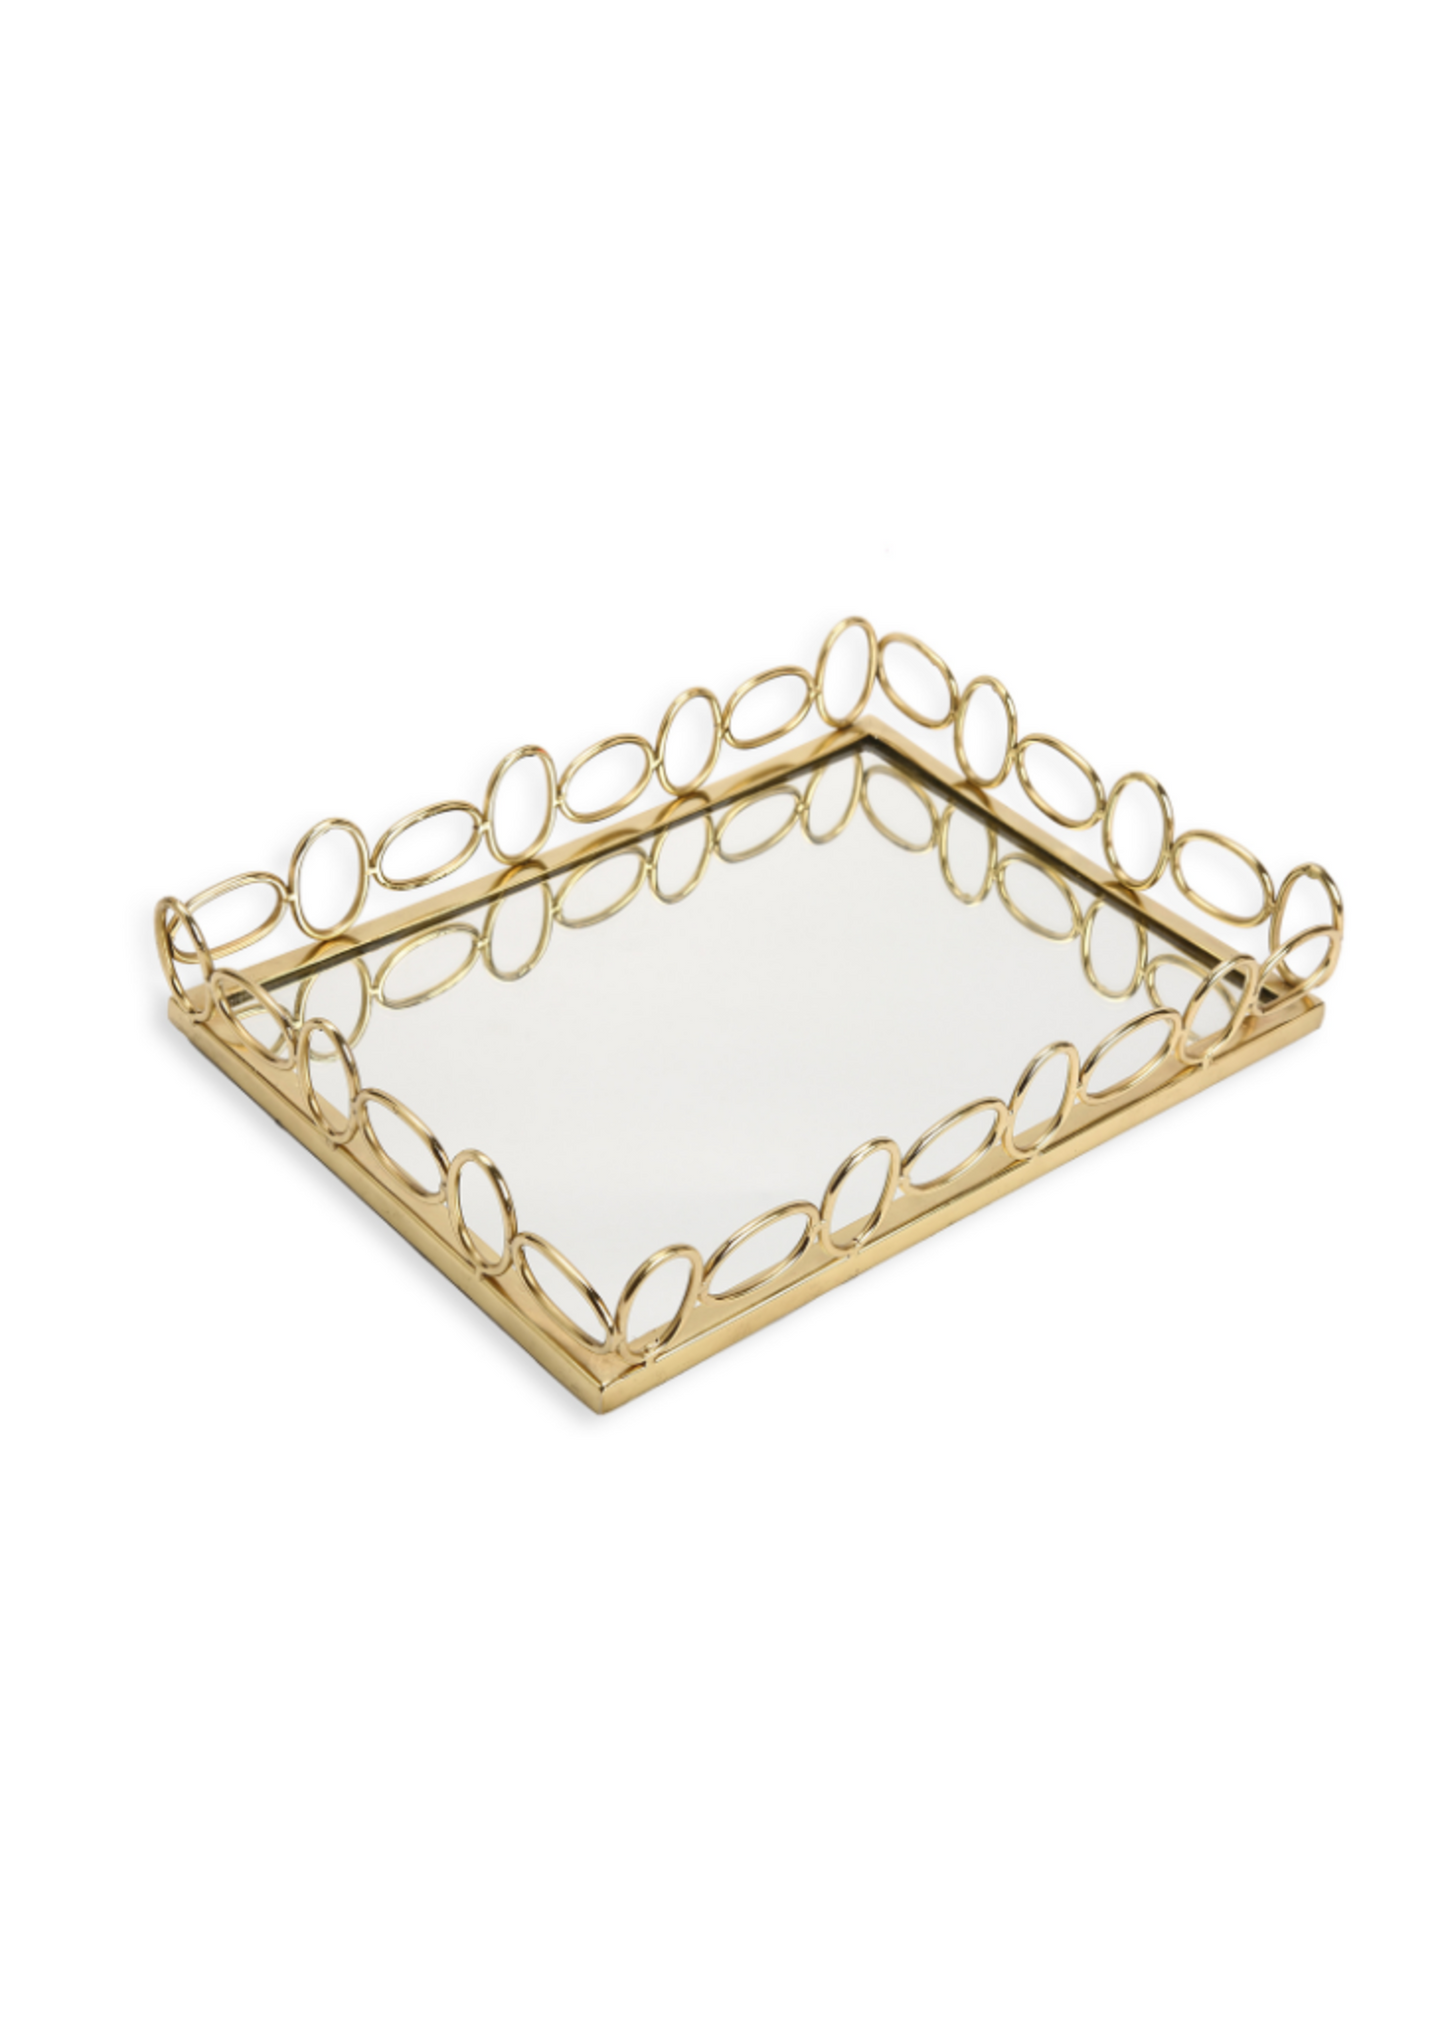 Gold Chain Mirror Tray